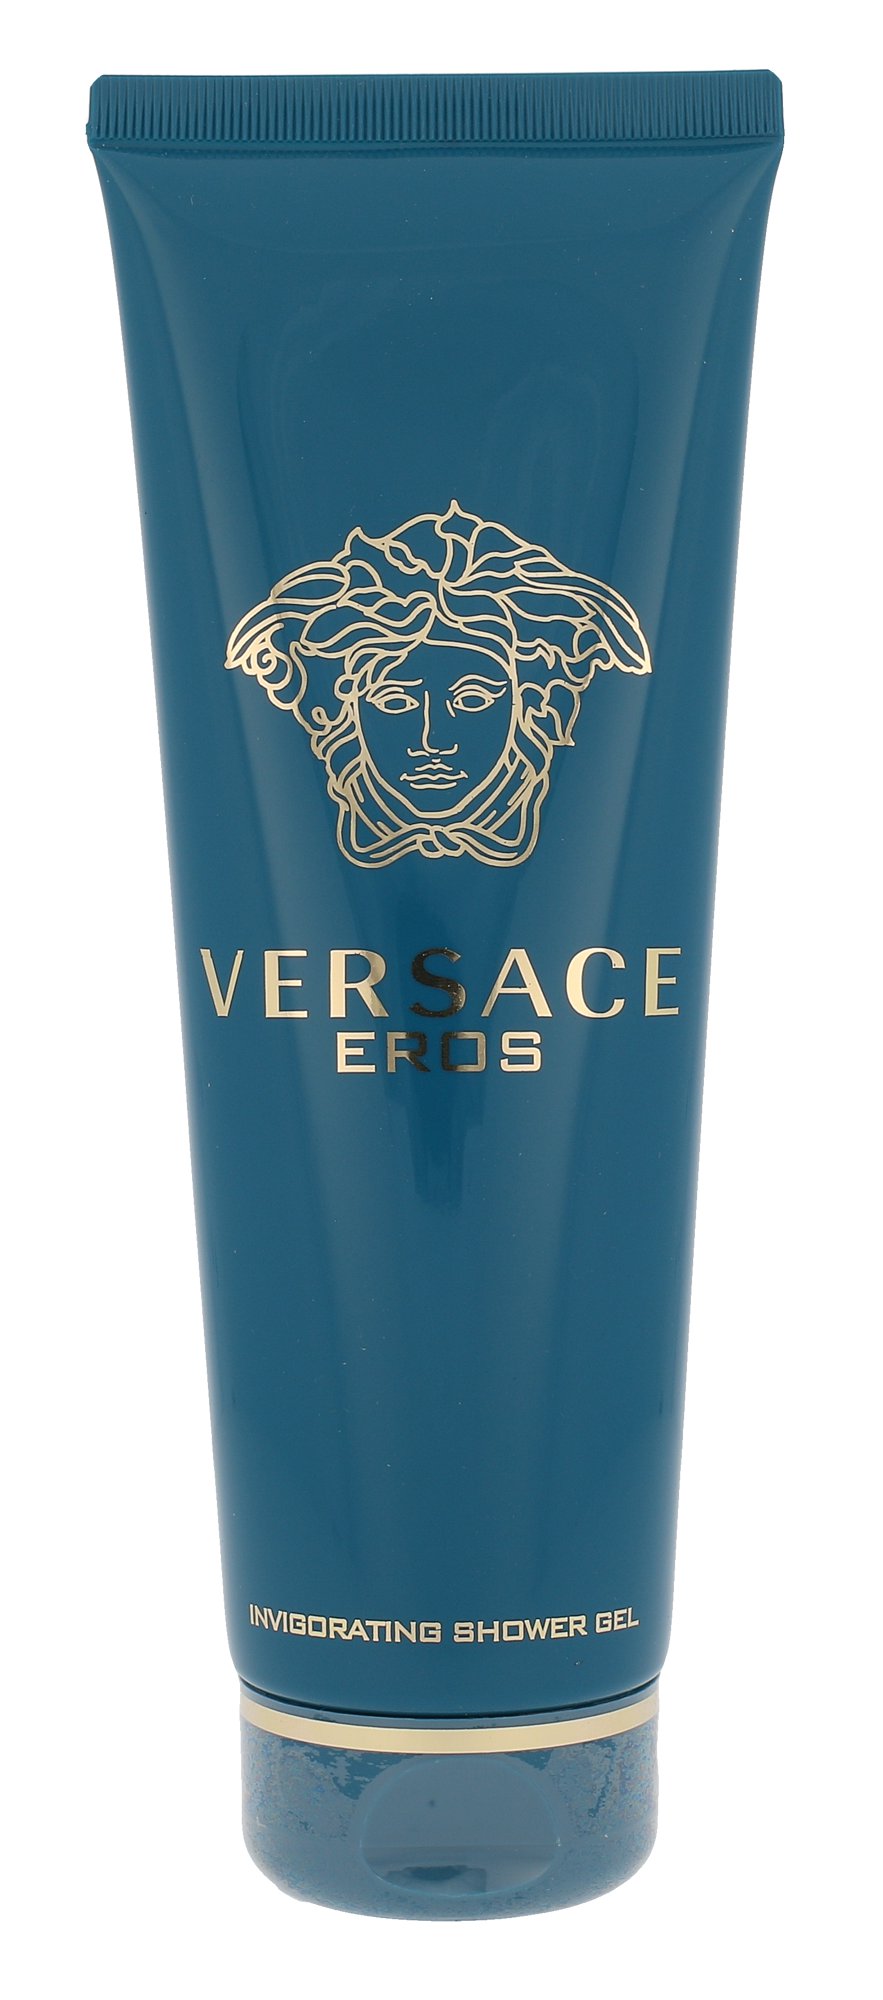 Versace Eros, tusfürdő gél 100ml